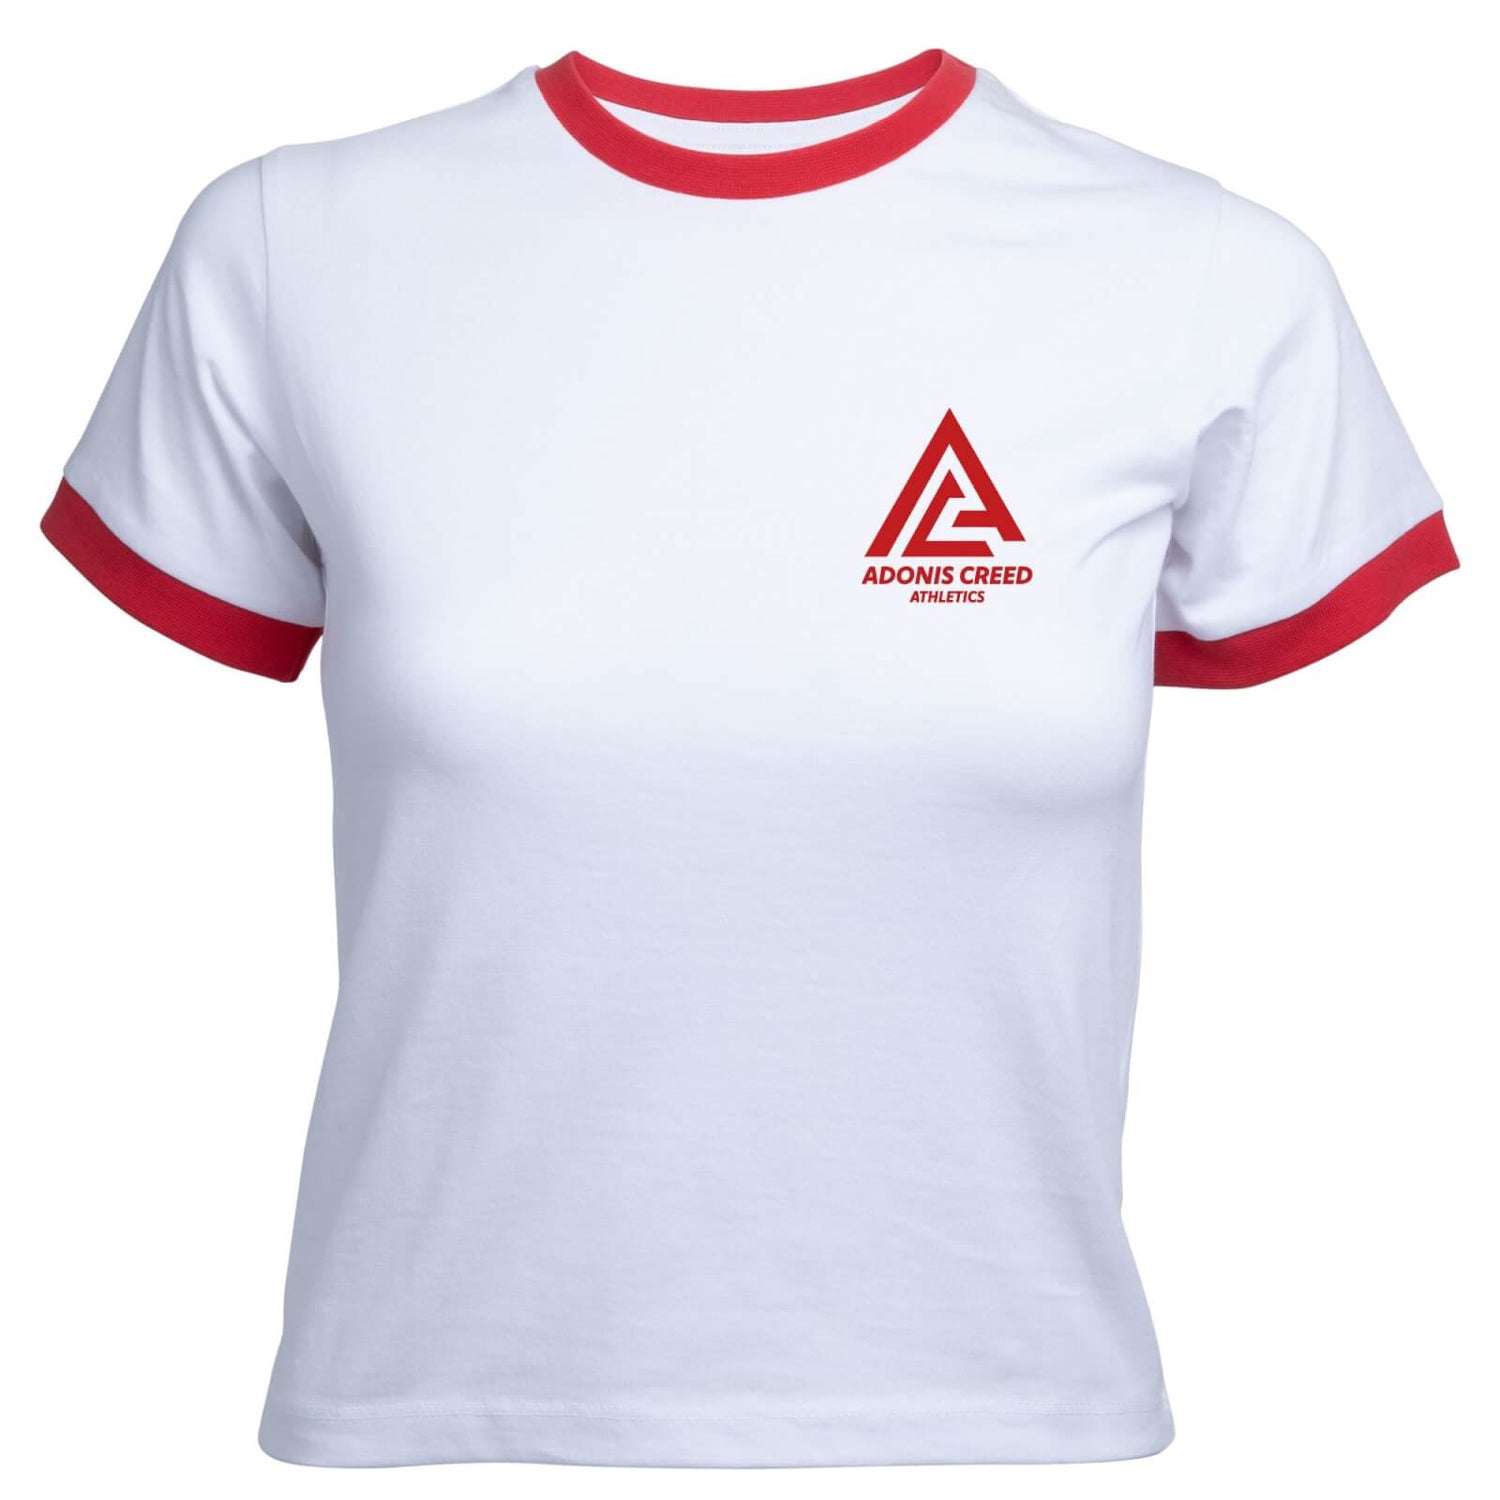 Creed Adonis Creed Athletics Logo Women's Cropped Ringer T-Shirt - White Red - XS